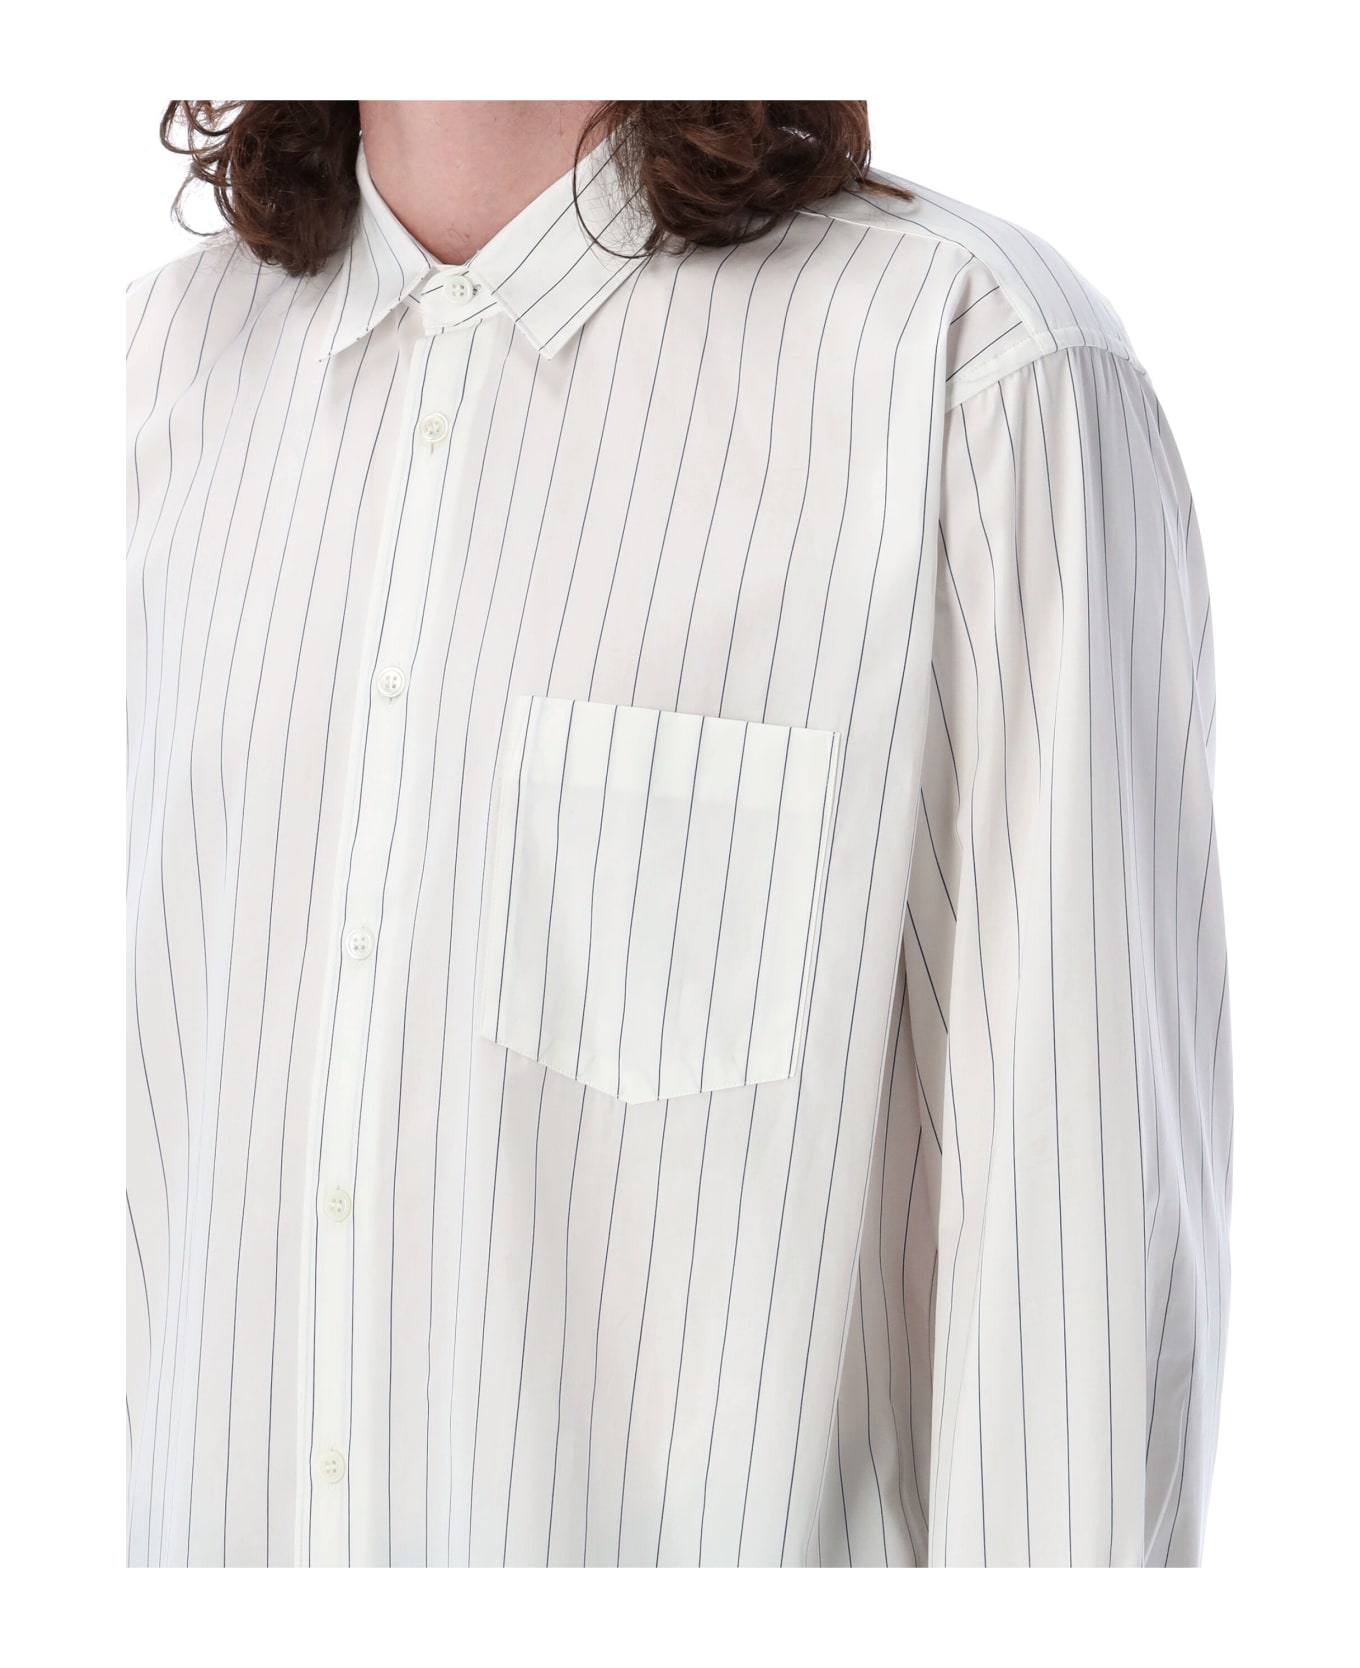 Comme des Garçons Shirt Striped Shirt - WHITE NAVY